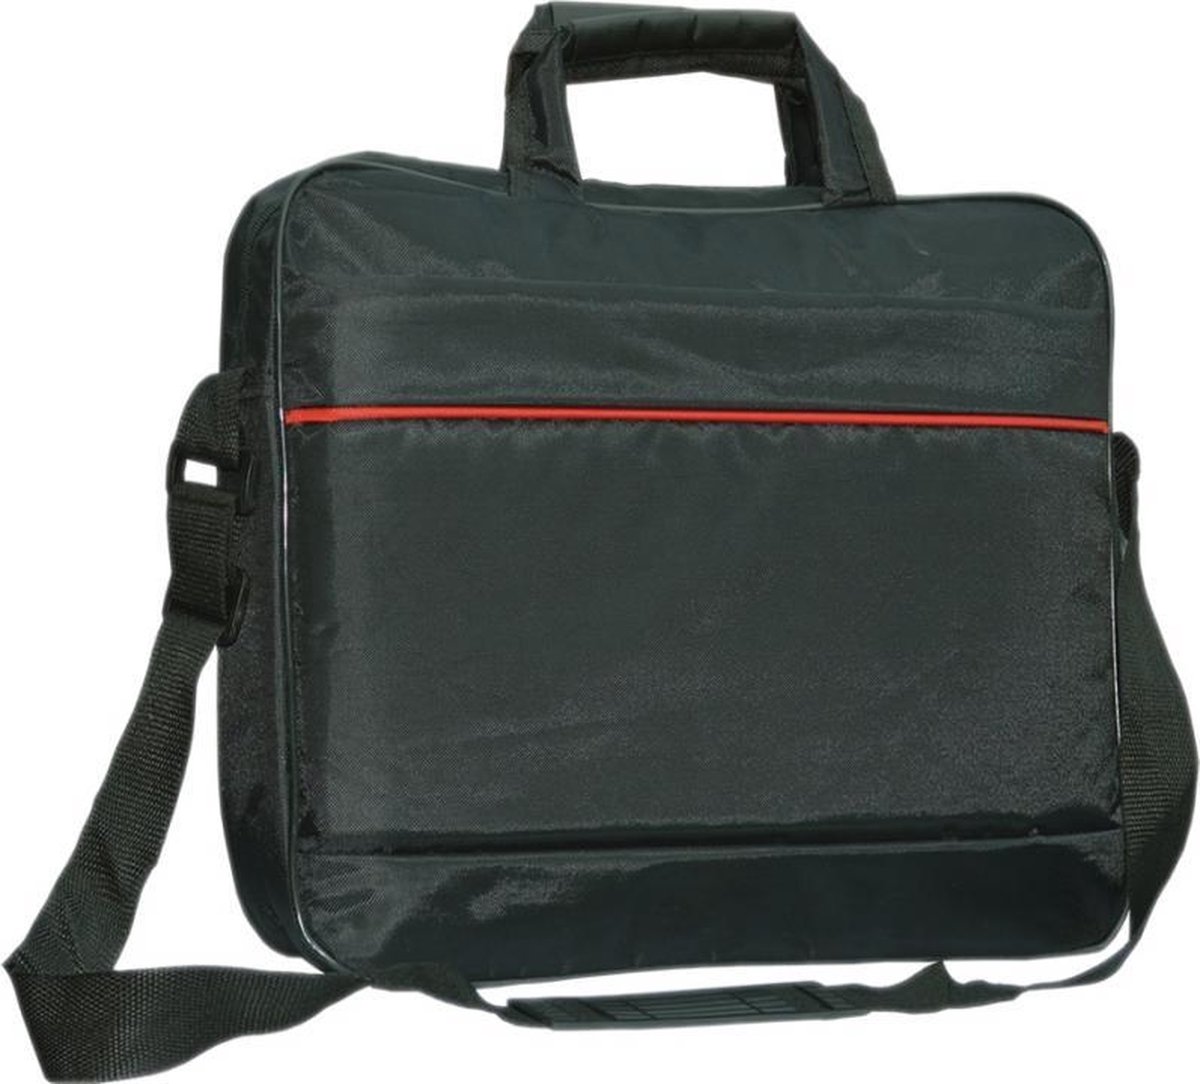 Asus Vivobook X202e laptoptas messenger bag / schoudertas / tas , zwart , merk i12Cover